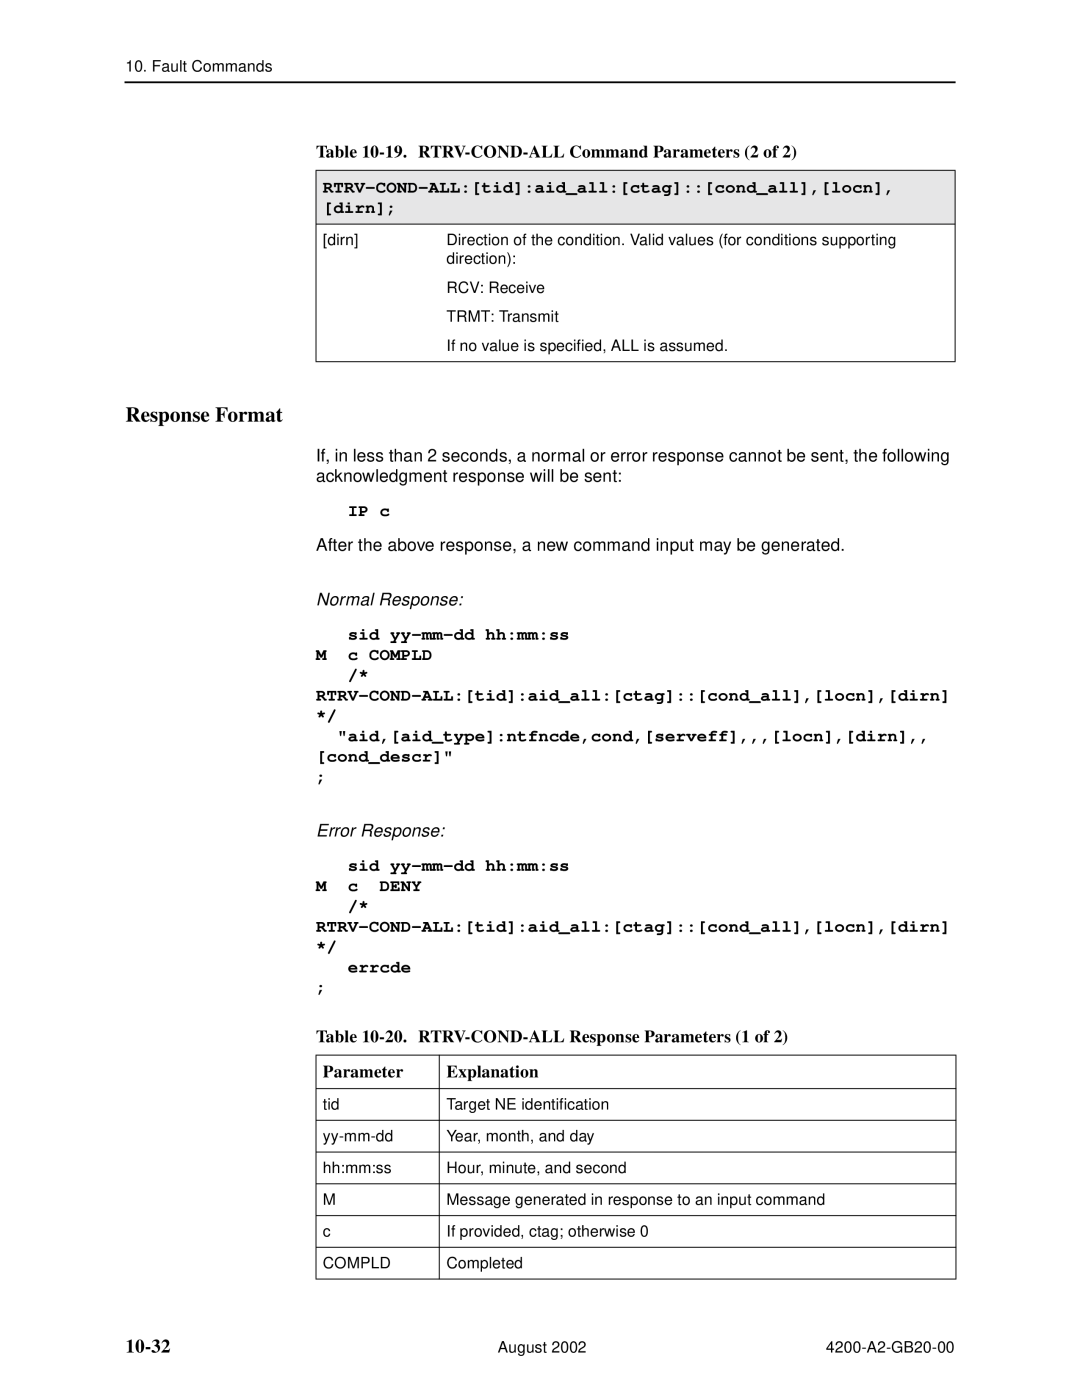 Paradyne 4200 manual 10-32, 19. RTRV-COND-ALL Command Parameters 2 of, RTRV-COND-ALLtidaidallctagcondall,locn,dirn, IP c 